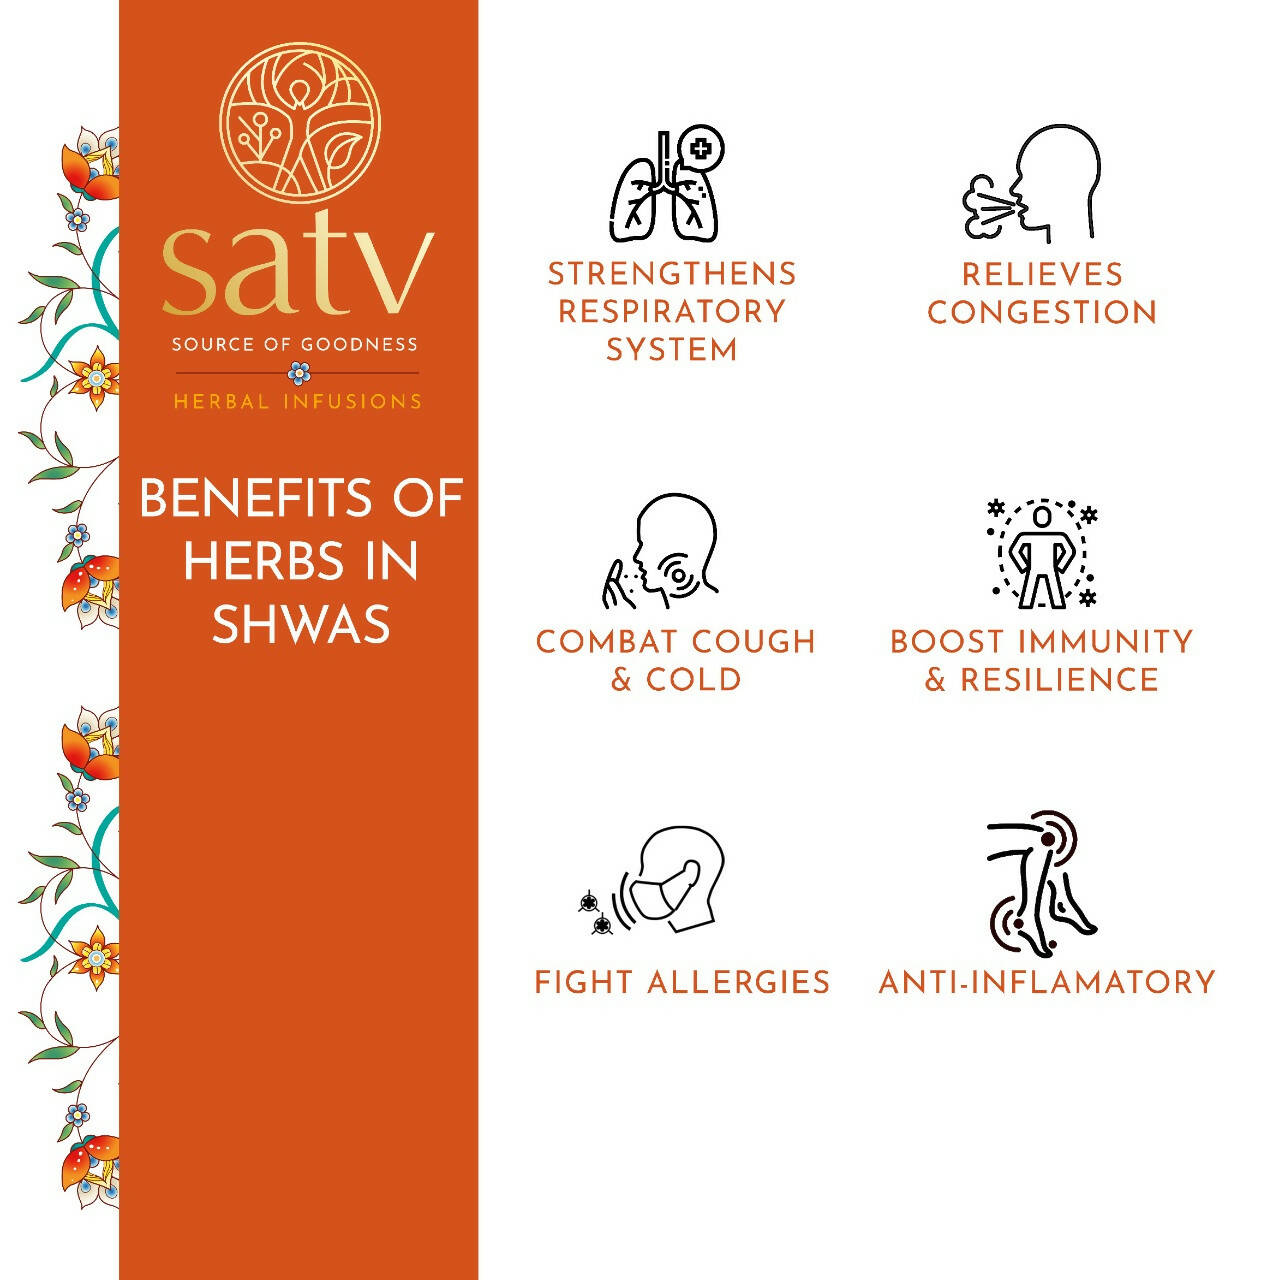 Satv Shwas Herbal Milk Tea